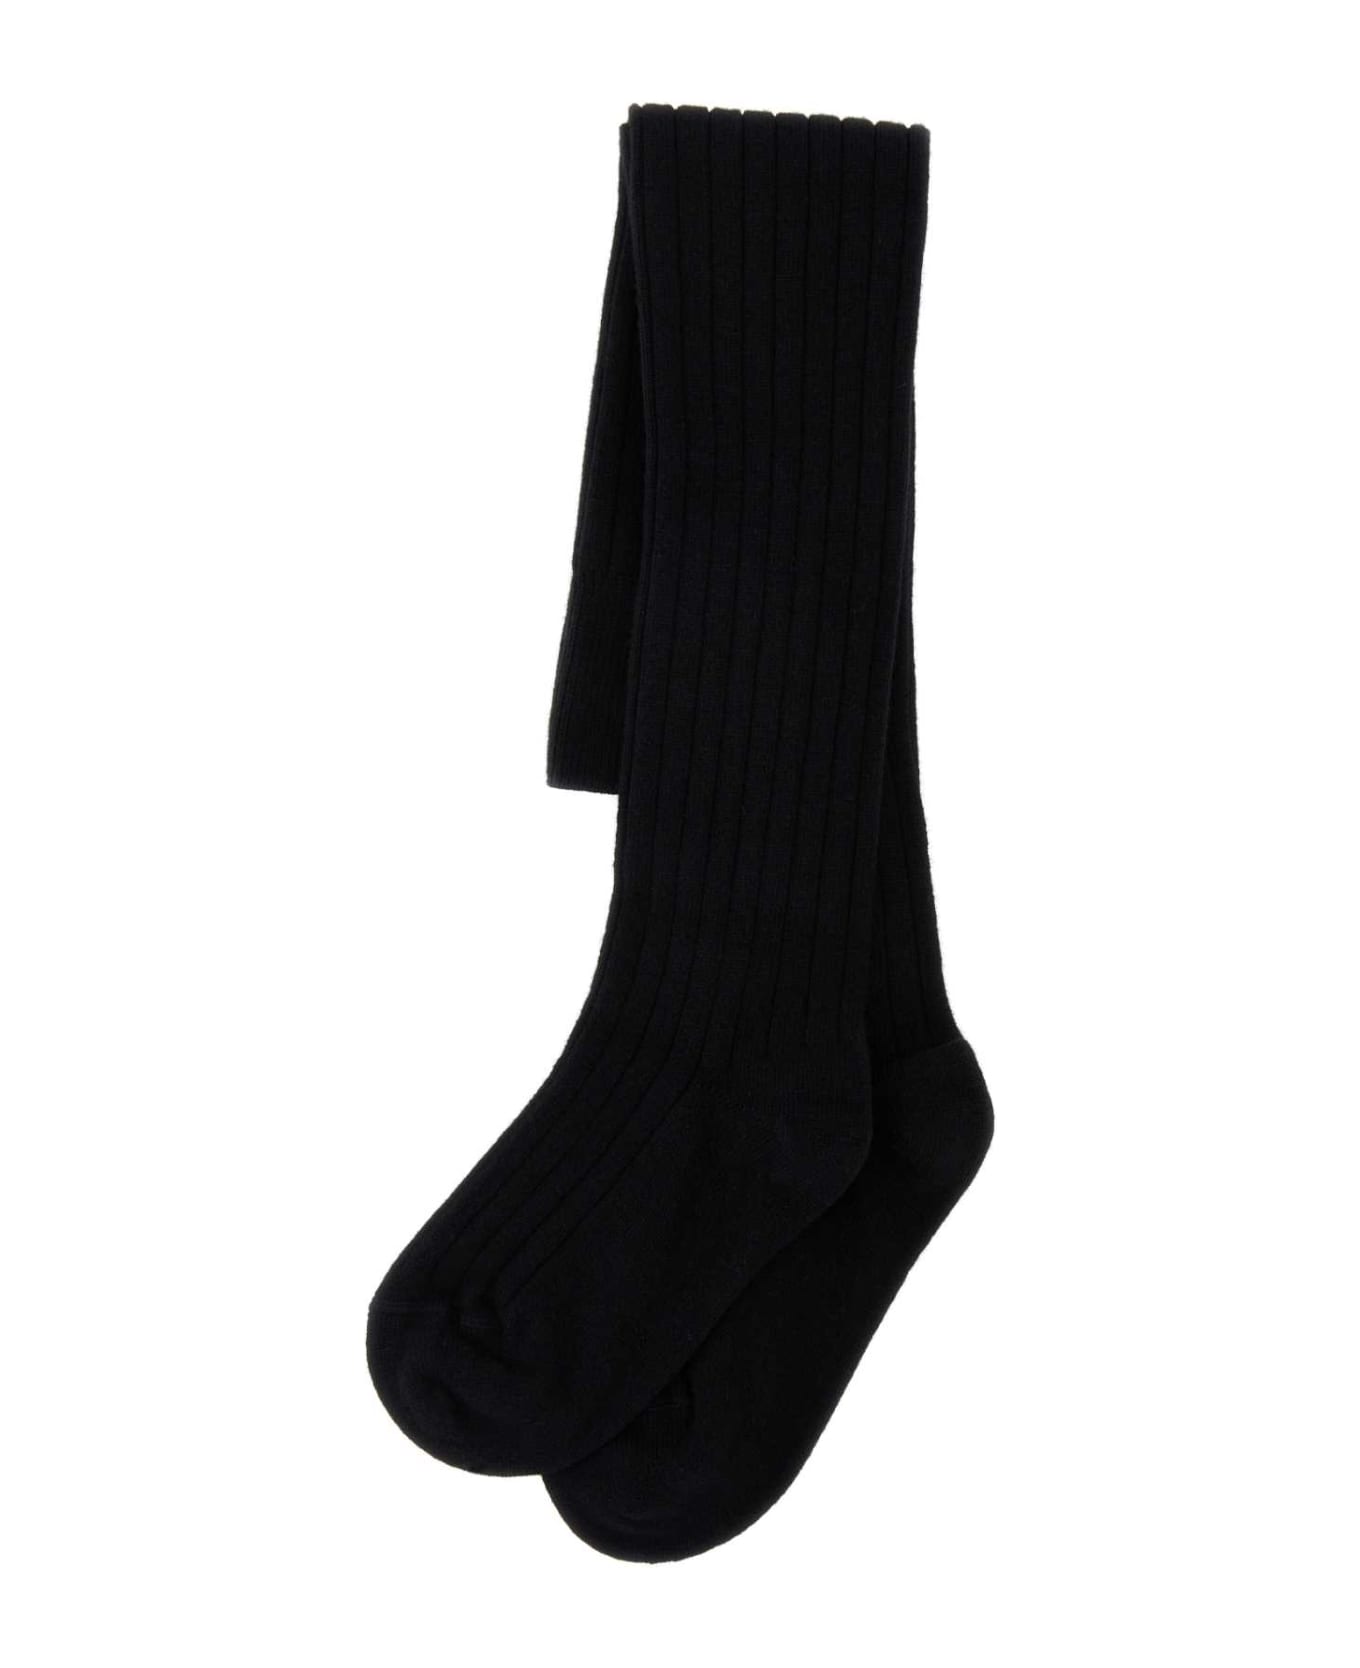 Prada Black Stretch Wool Blend Socks - NERO